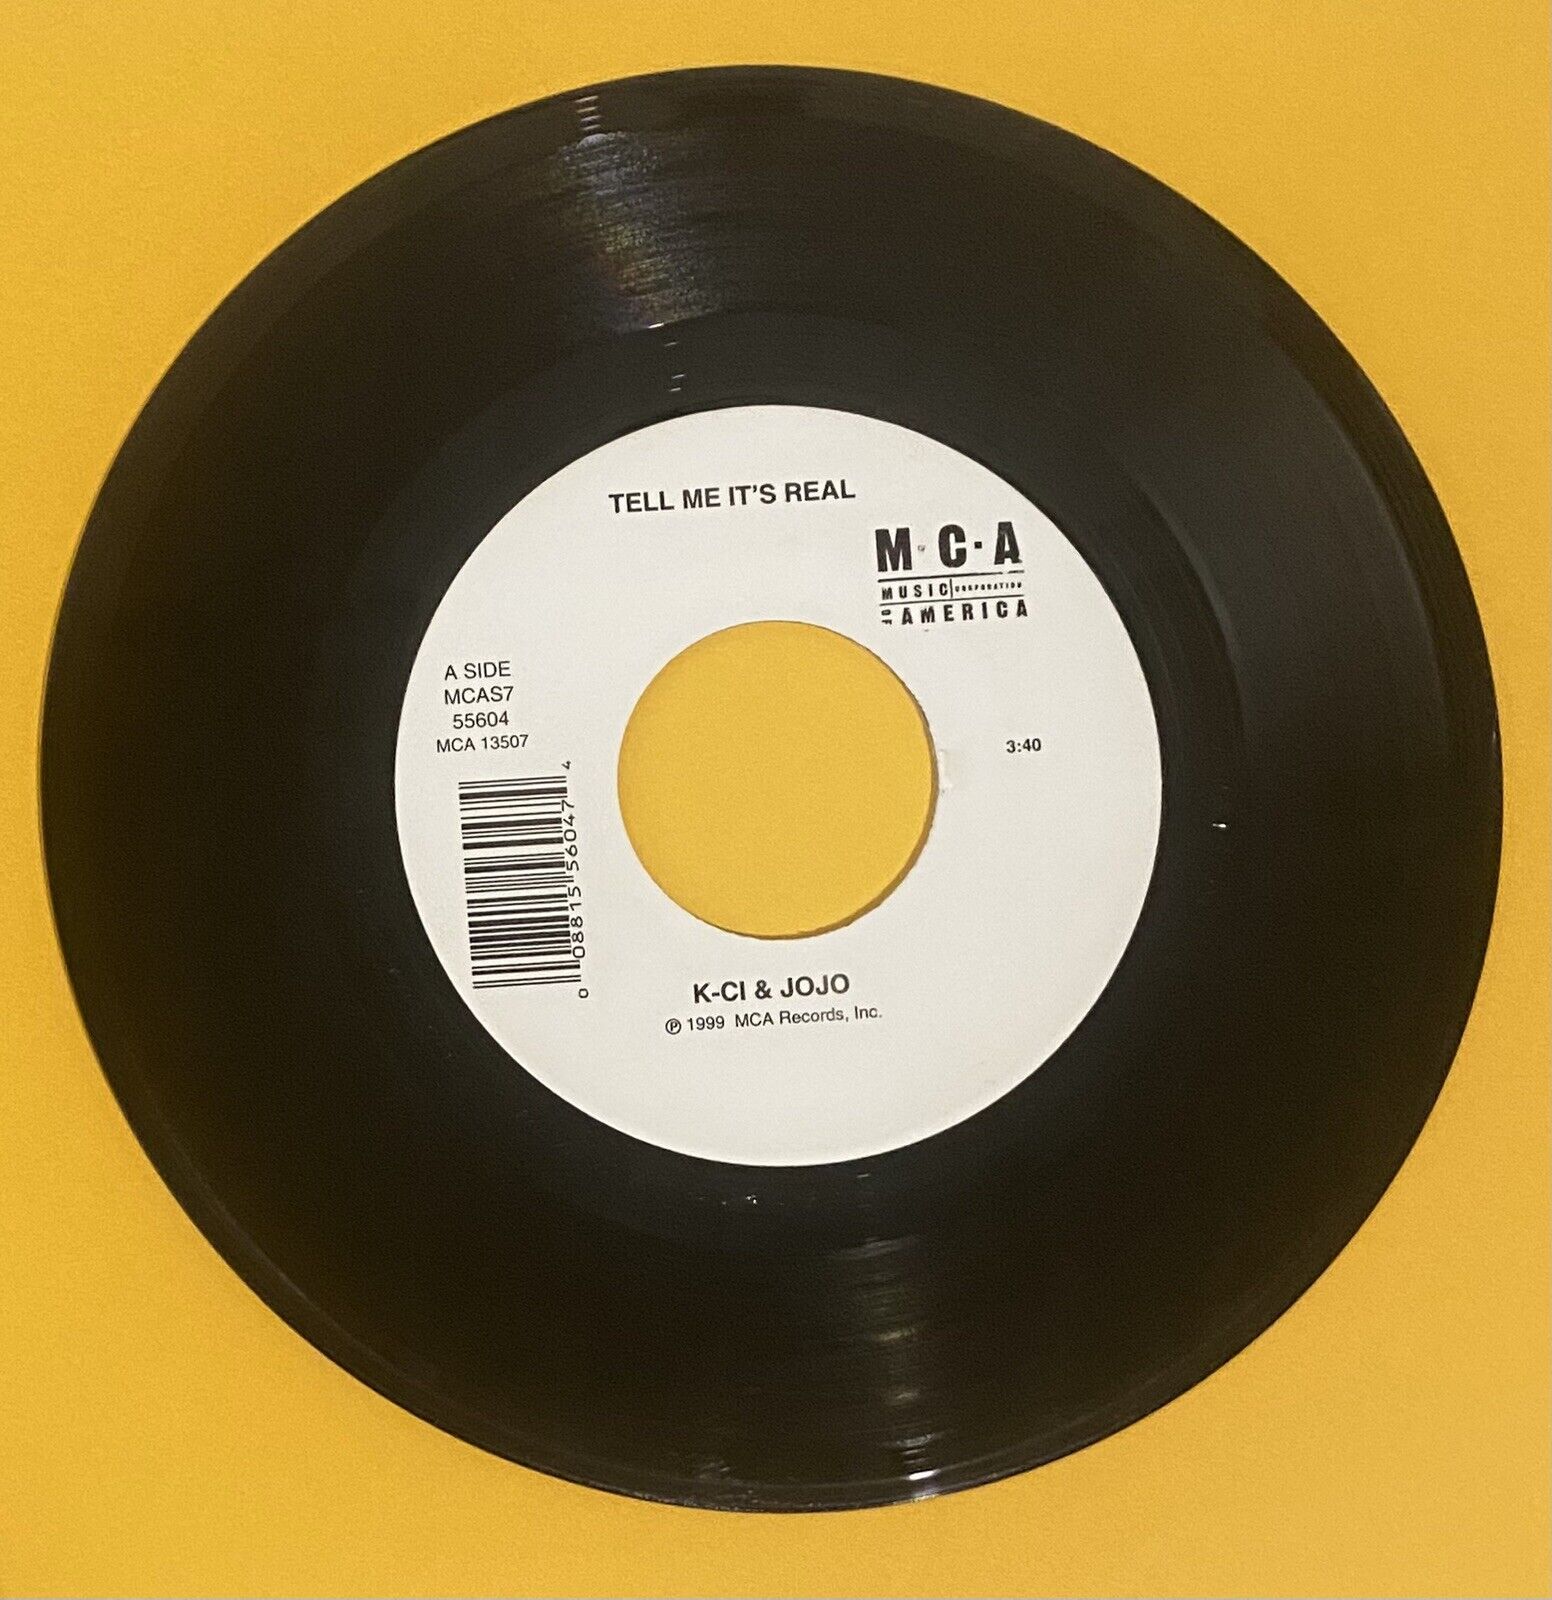 K-CI & JOJO " All My Life / Tell Me Its Real " vinyl 45 record